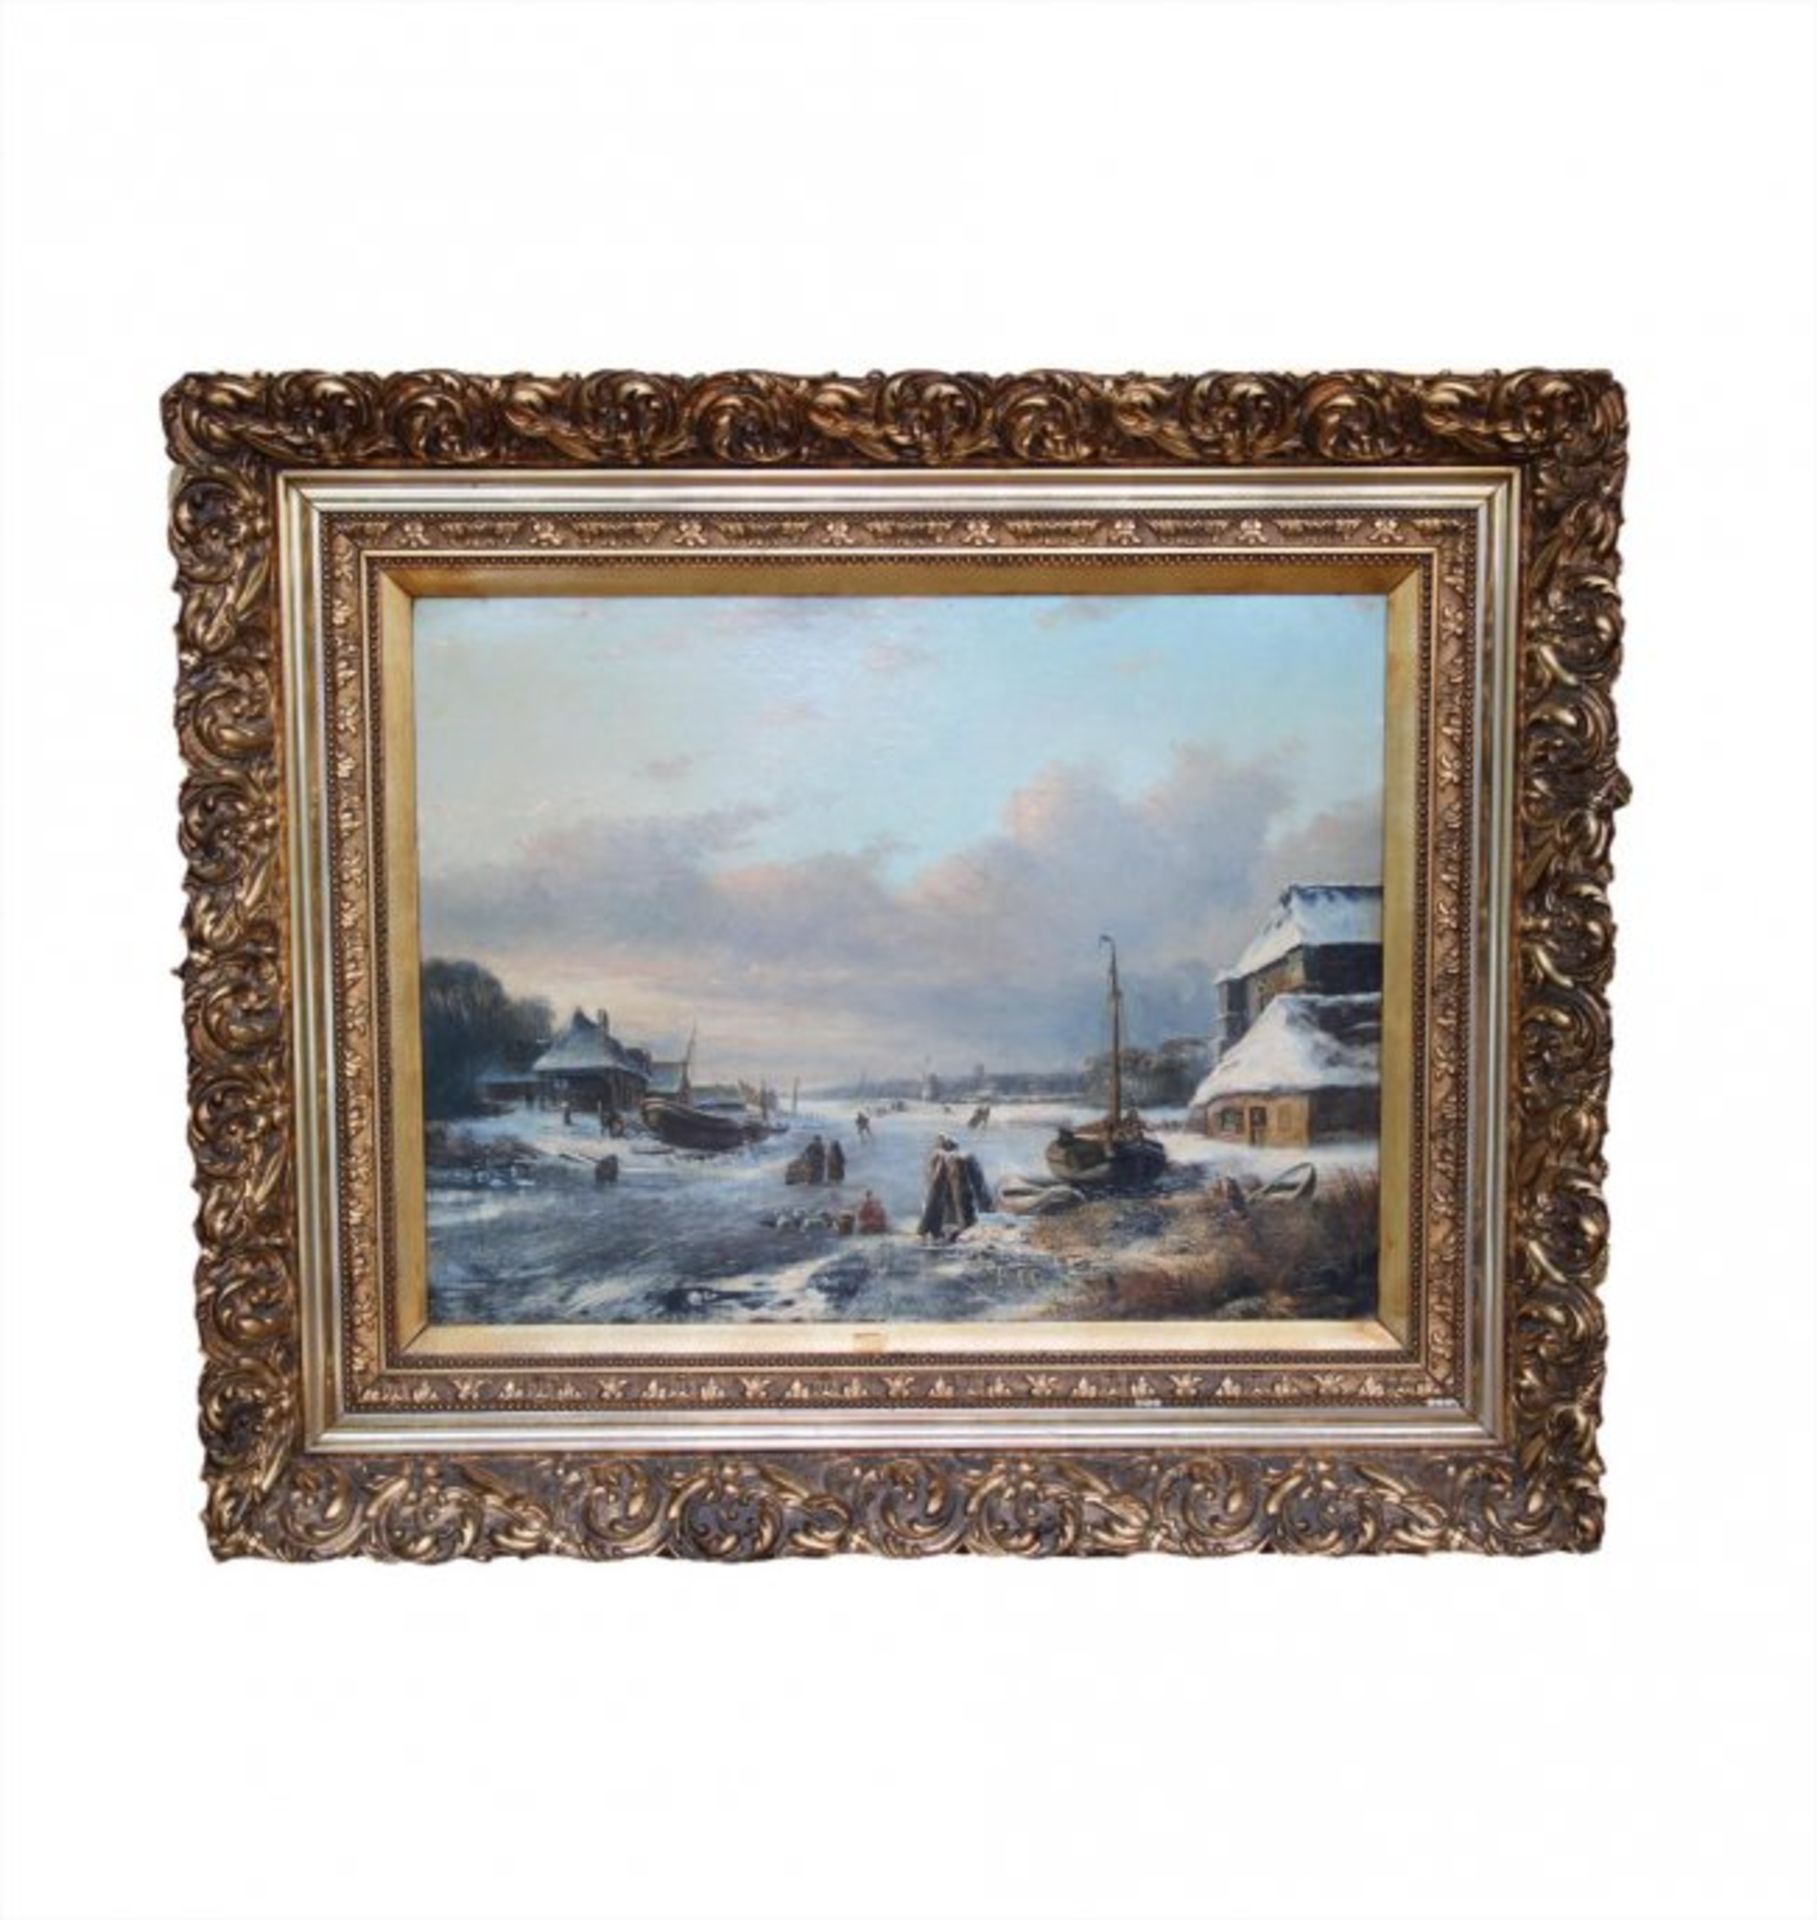 Antique painting "Winter"